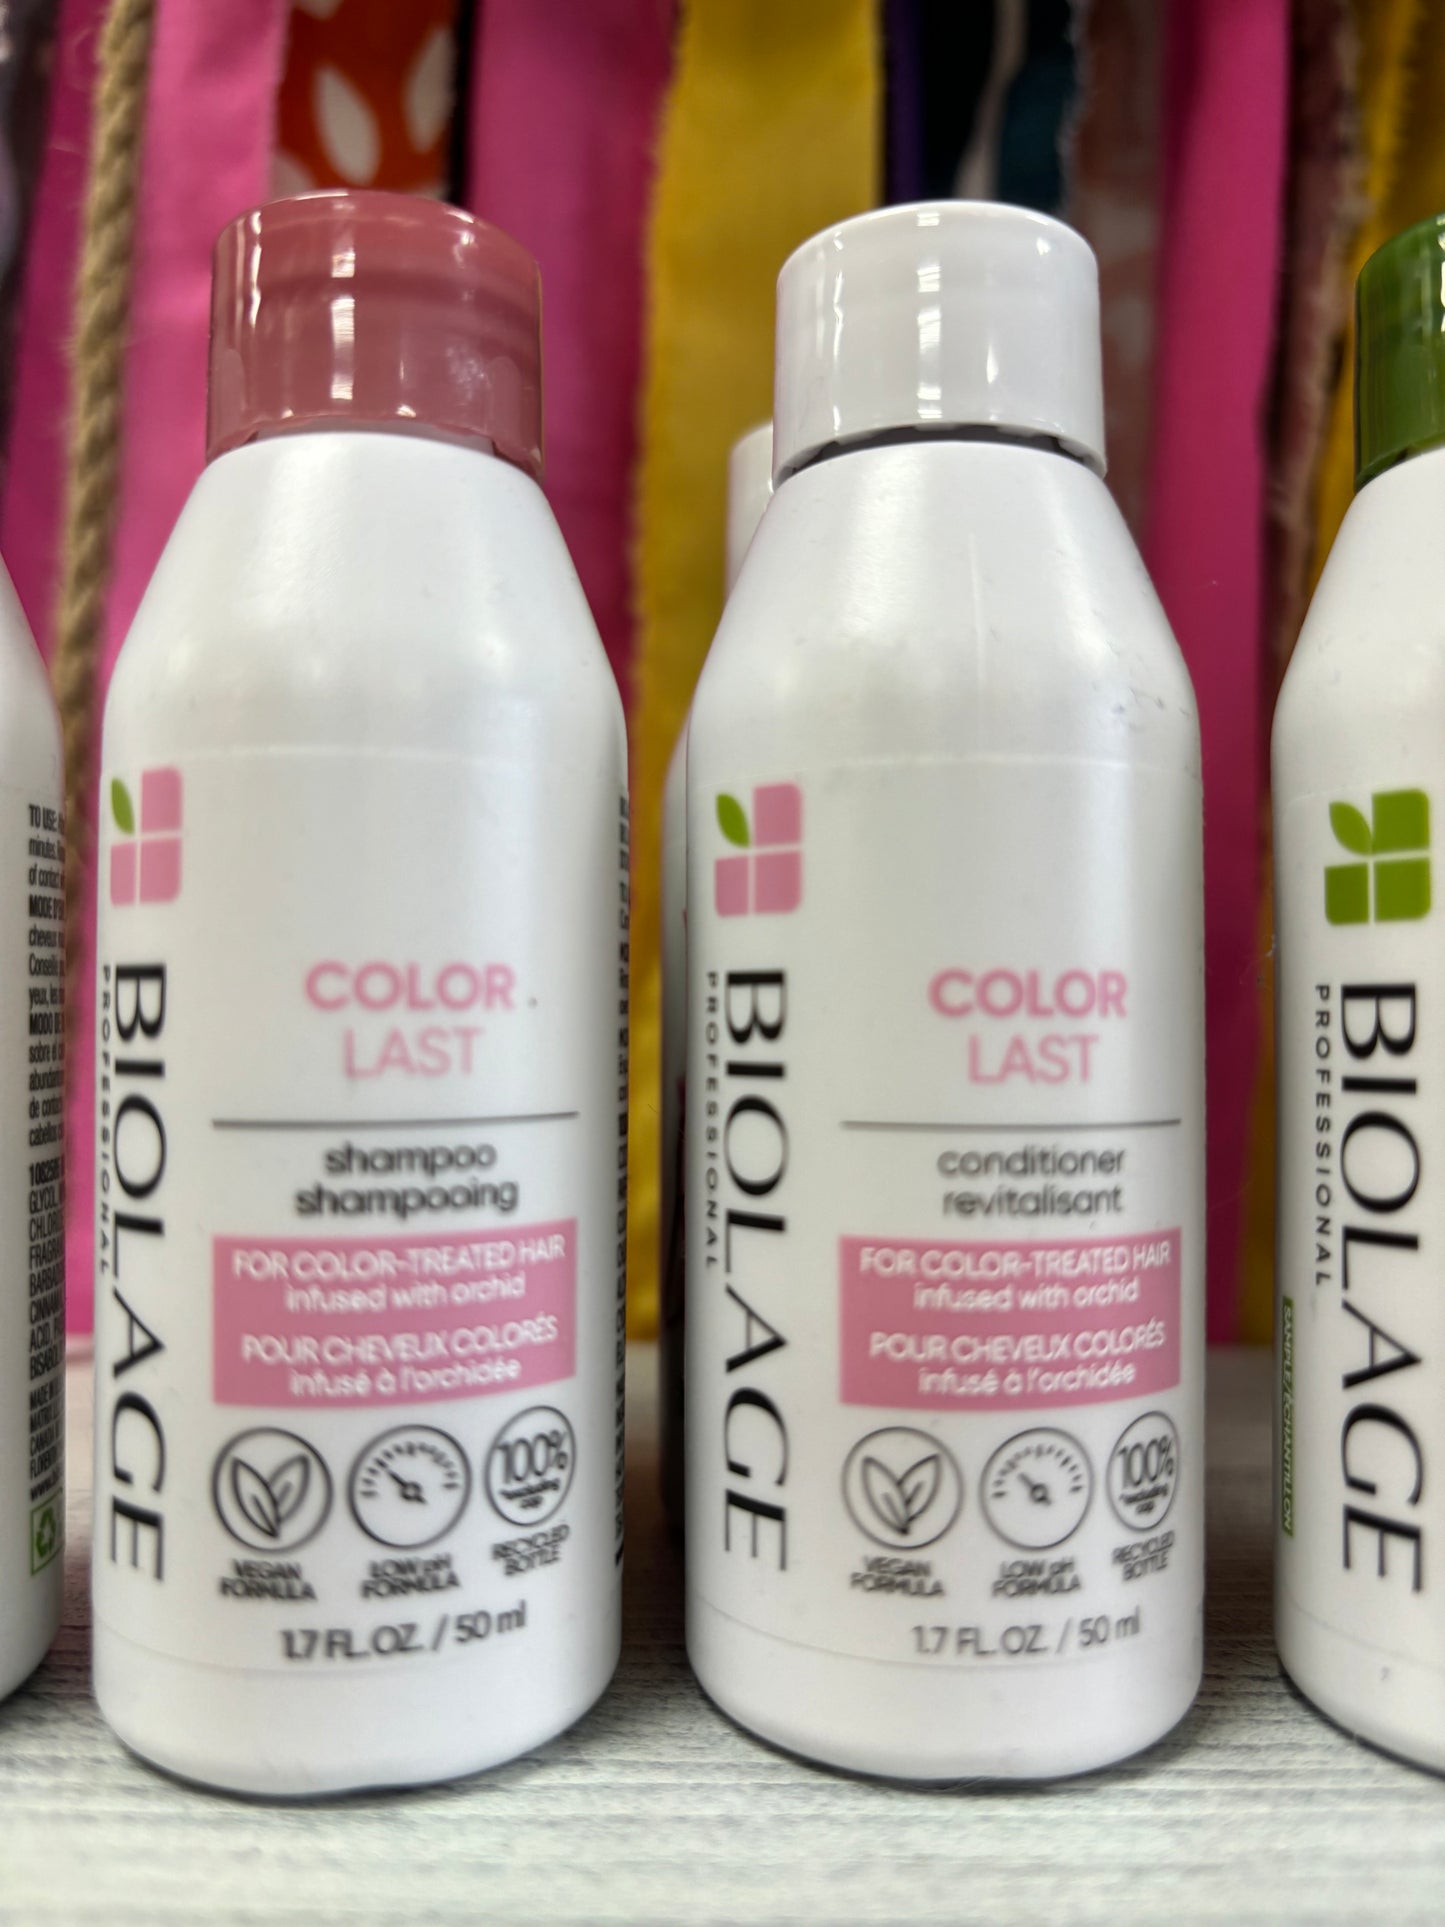 Biolage 1.7oz shampoo/conditioner